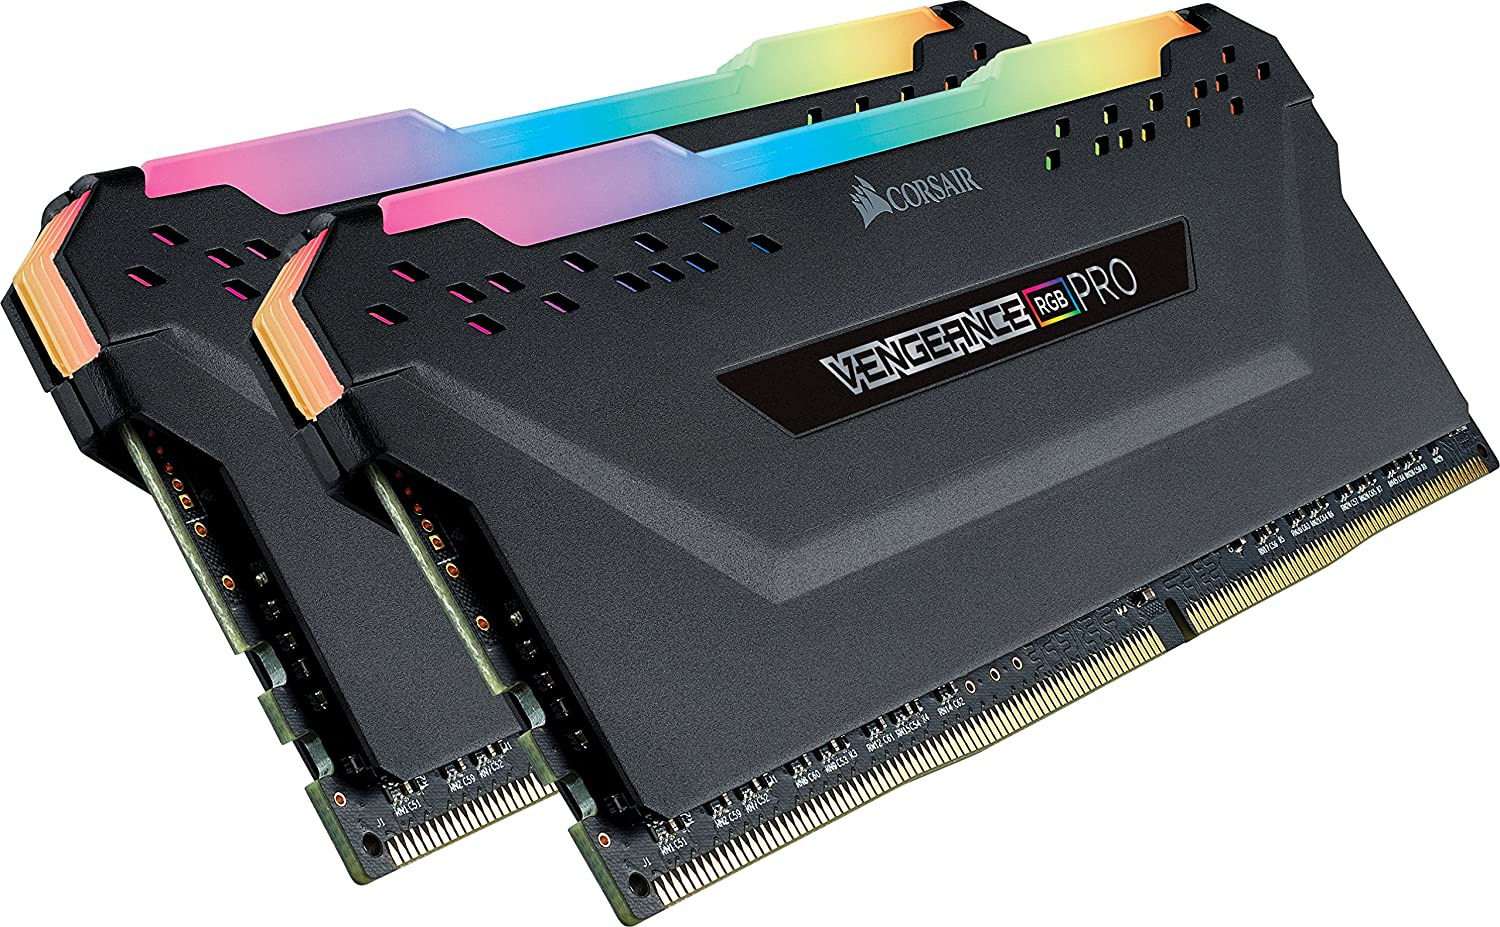 Vengeance RGB PRO 16GB (2X8Gb) DDR4 3000Mhz C15 LED Desktop Memory - Black, Mode